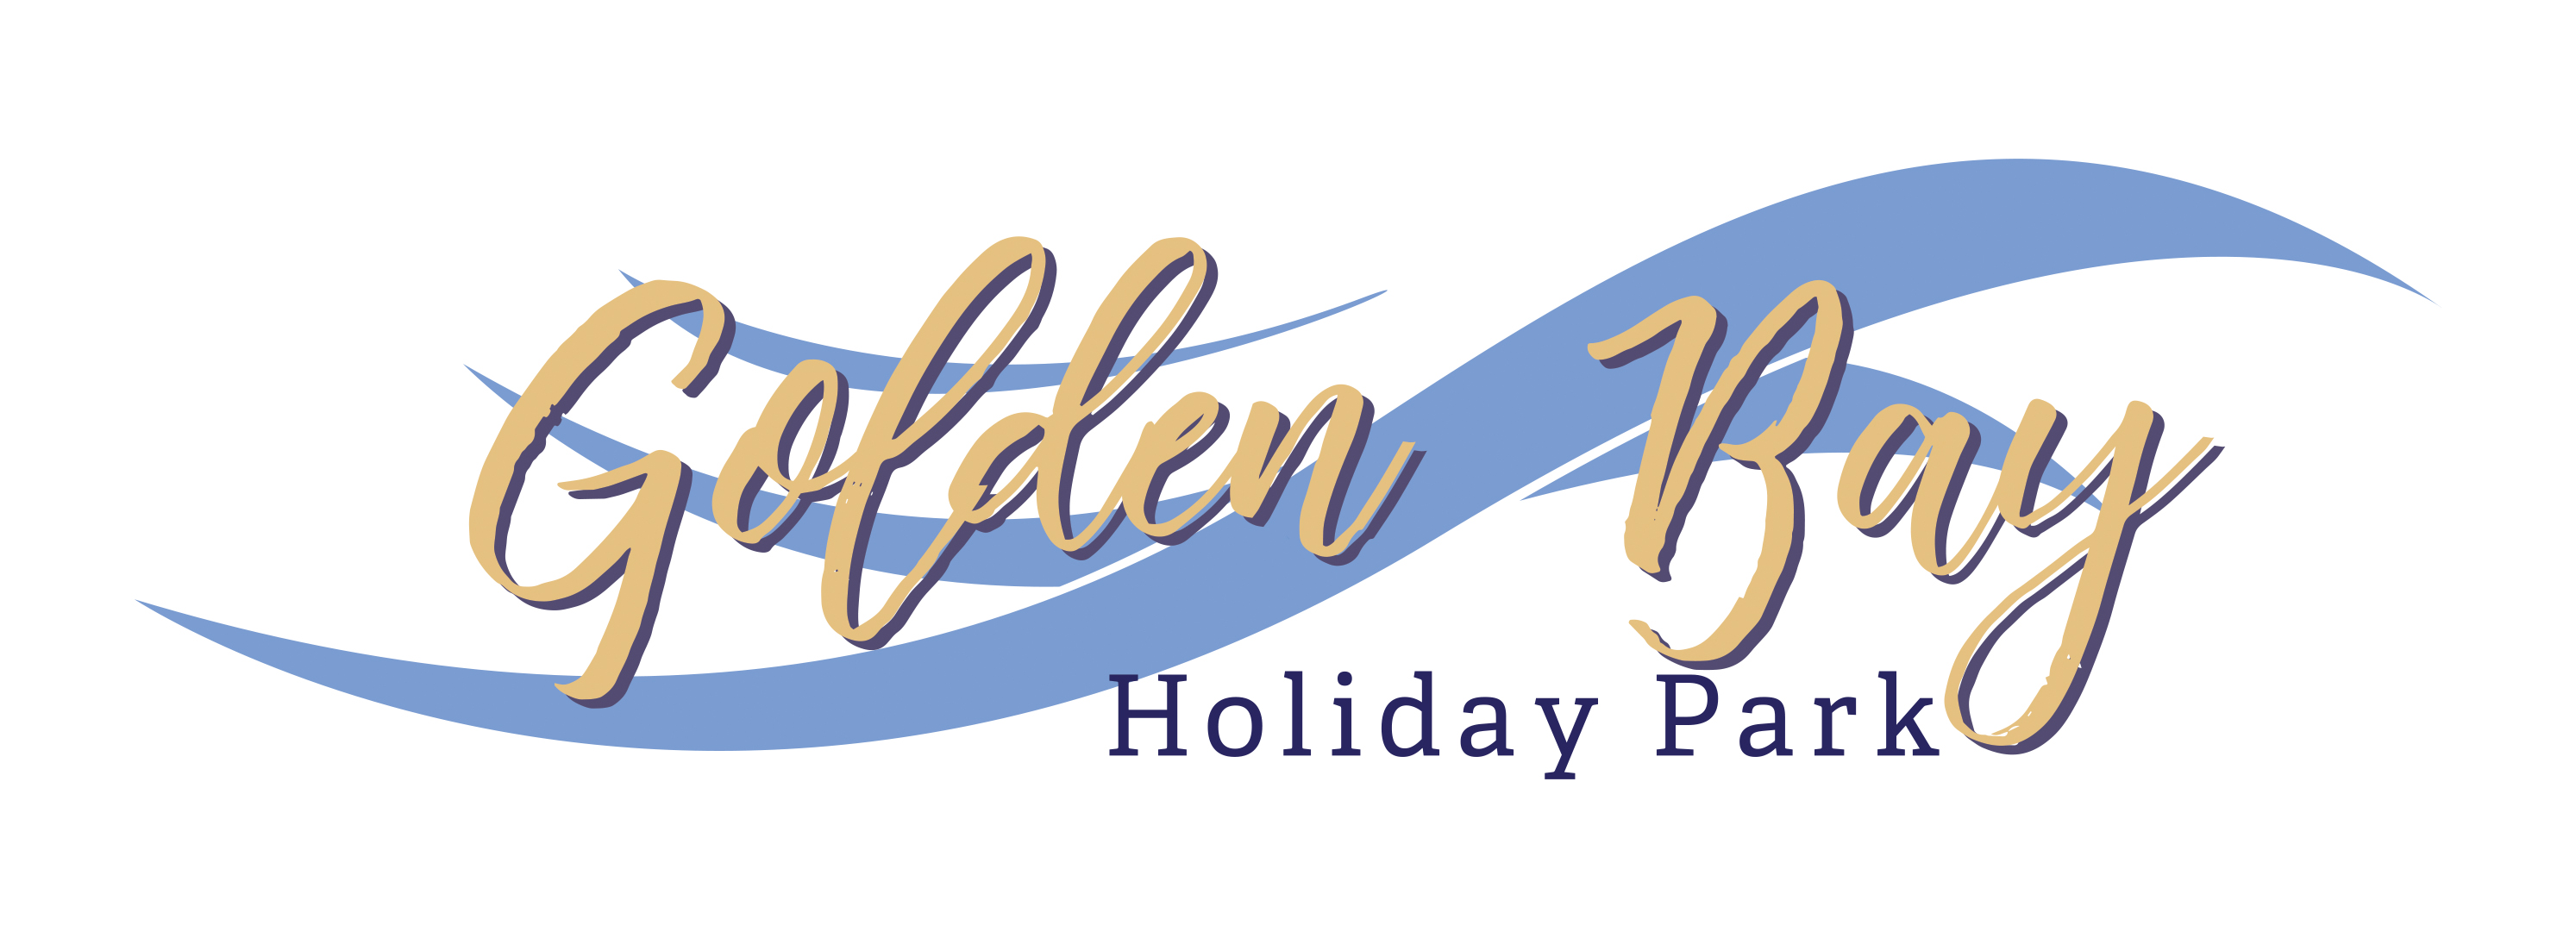 Golden Bay Holiday Park | Logo